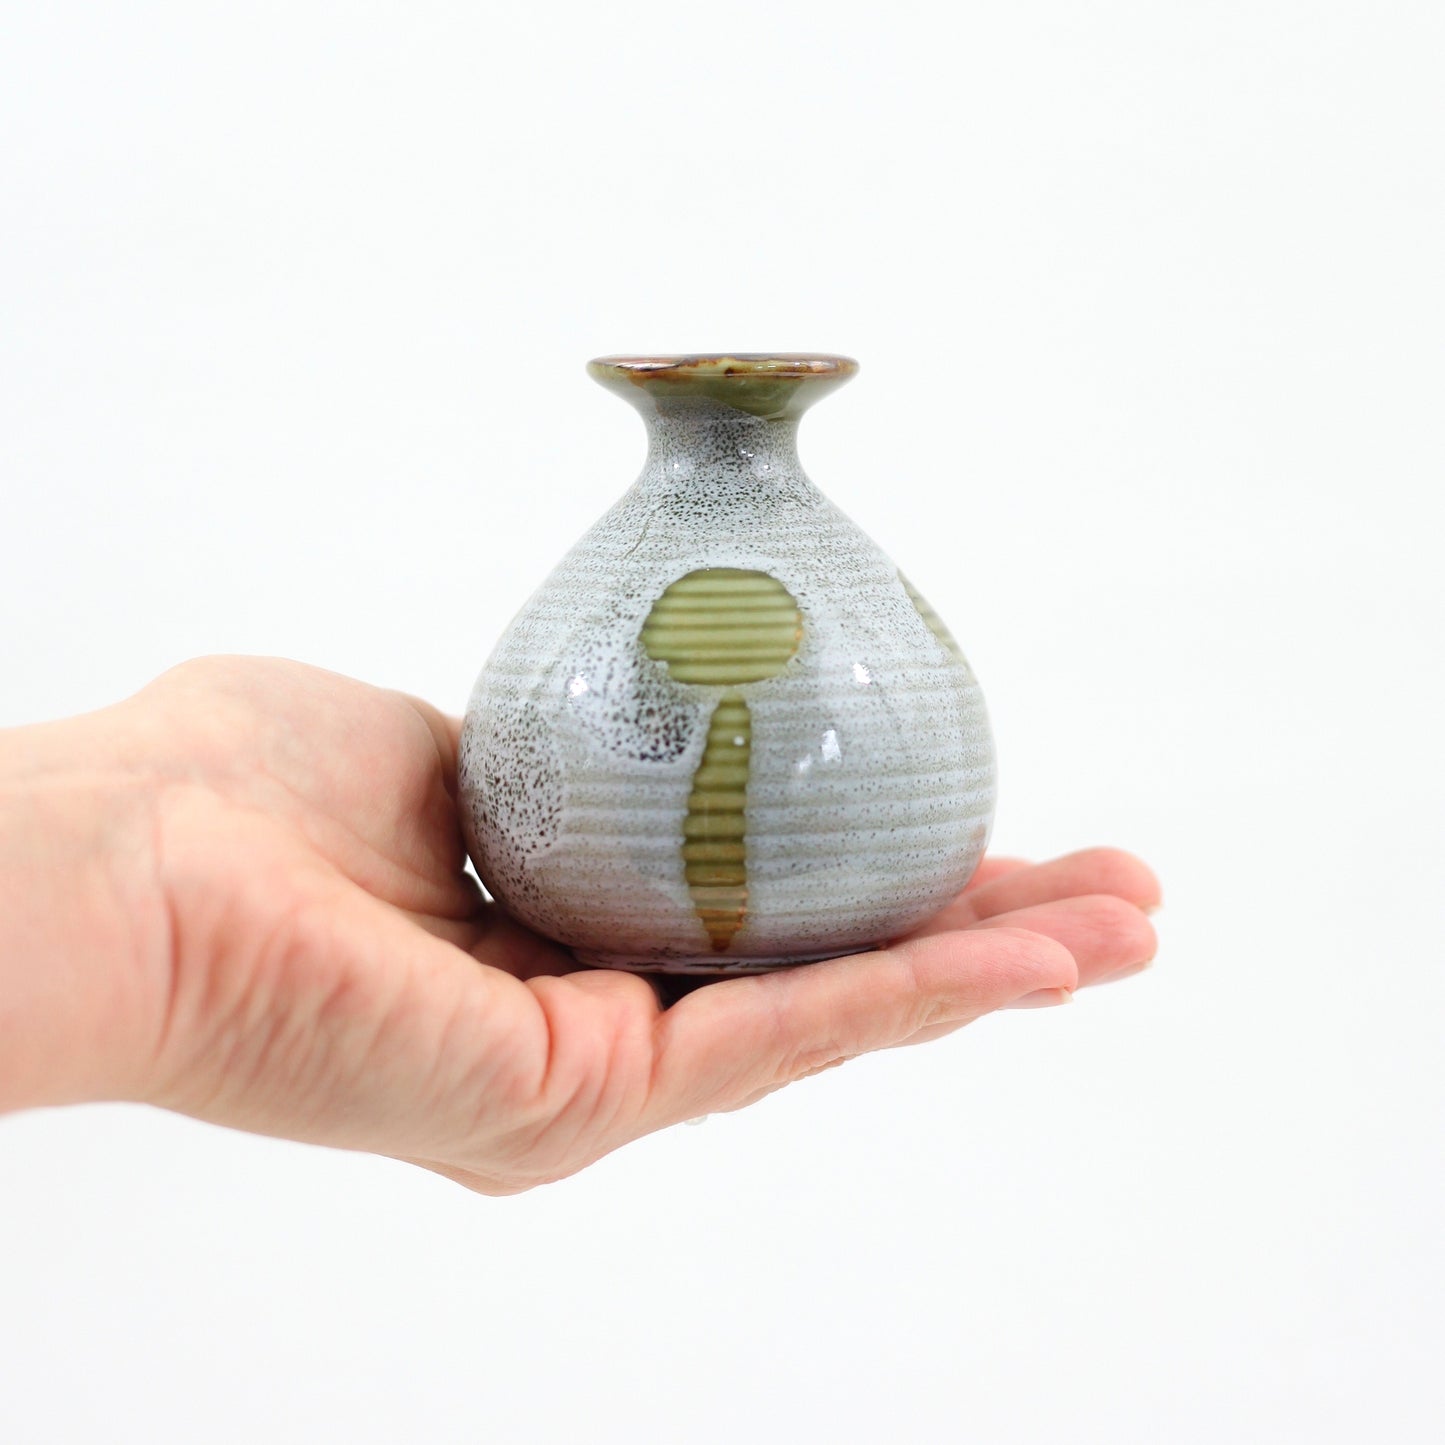 SOLD - Vintage Stoneware Bud Vase